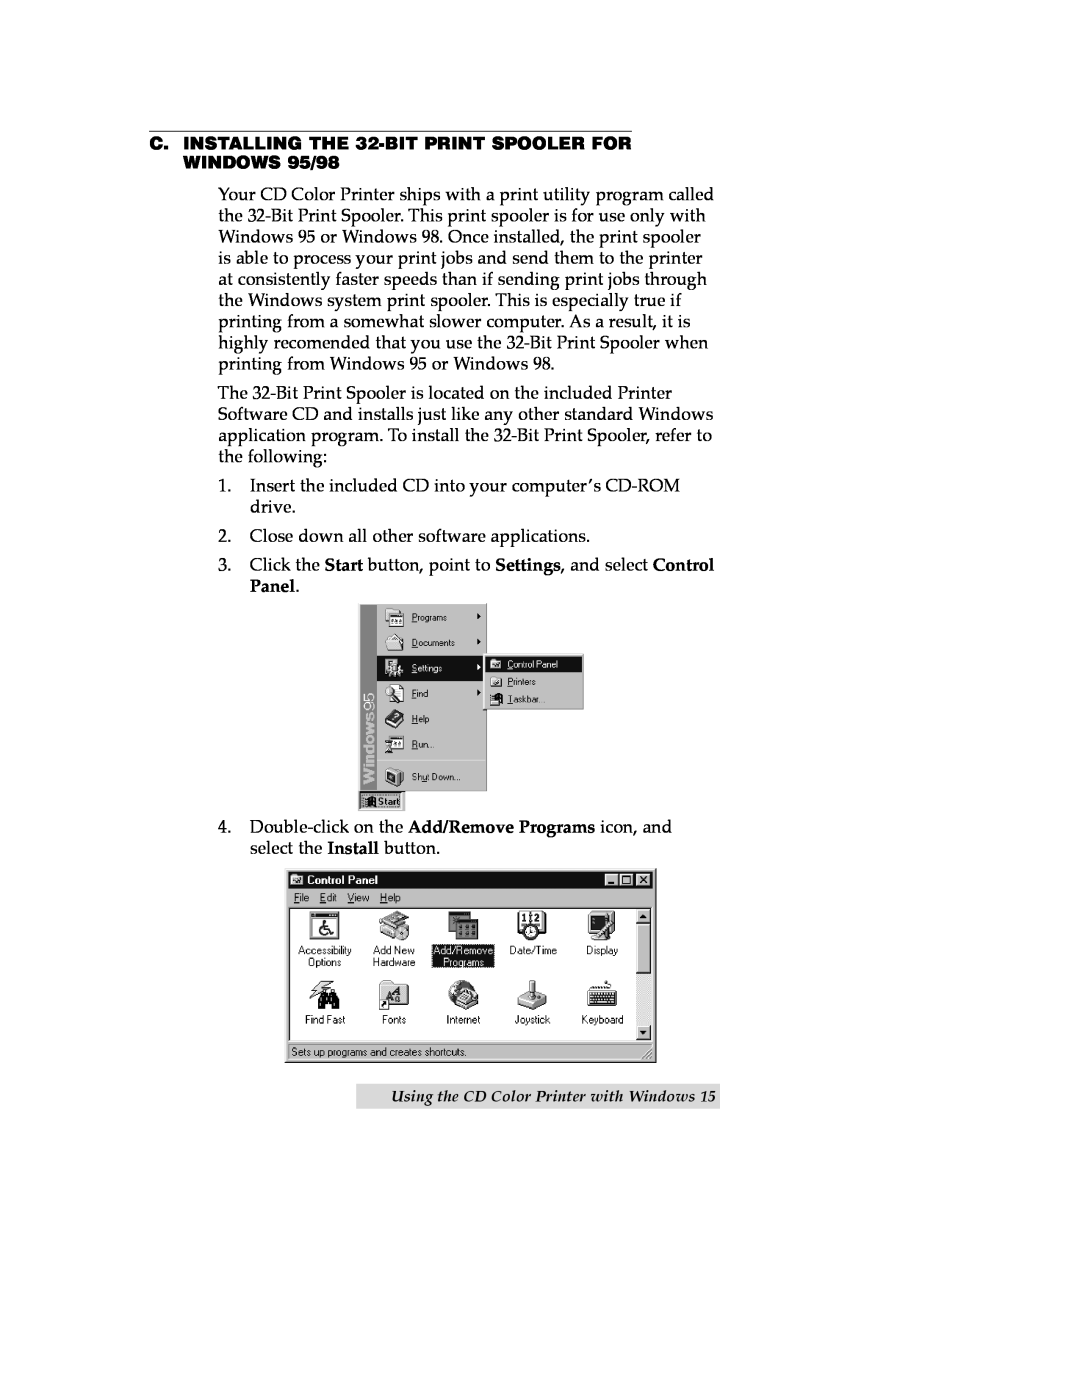 Primera Technology CD Color Printer II manual C. INSTALLING THE 32-BIT PRINT SPOOLER FOR WINDOWS 95/98 